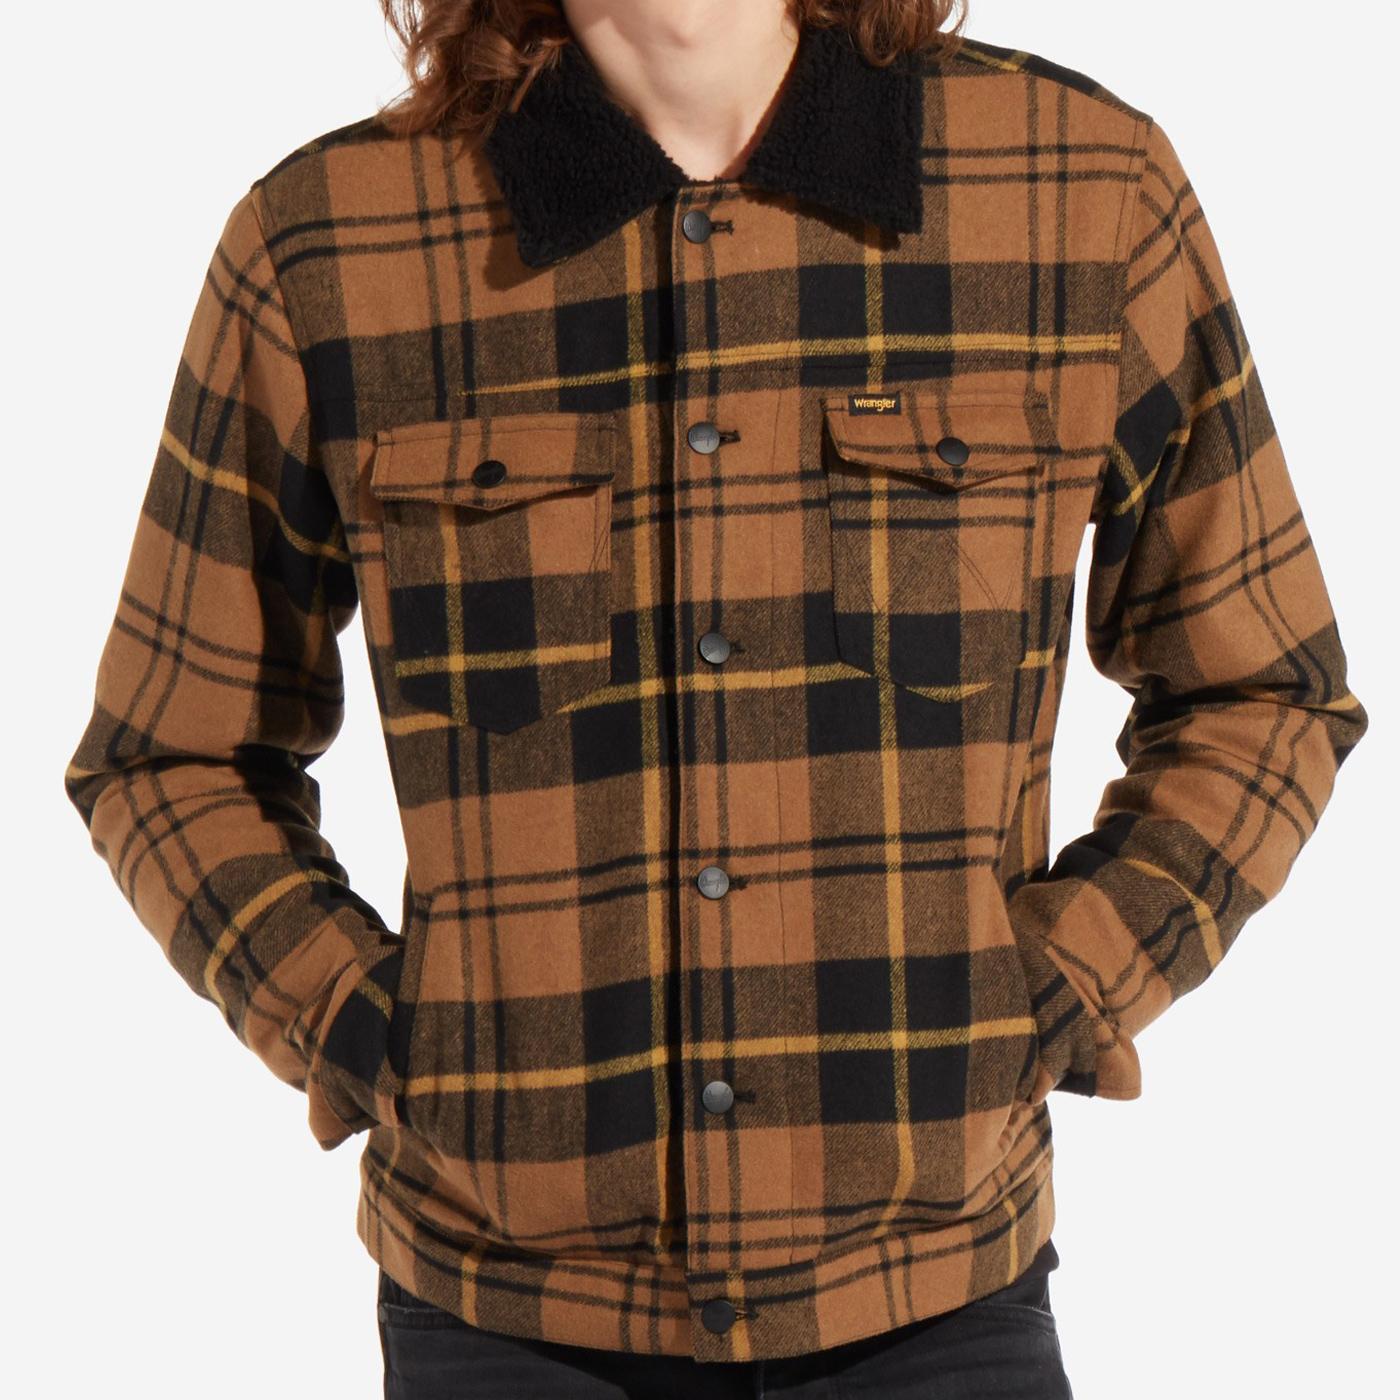 WRANGLER Wool Sherpa Trucker Jacket (Golden Brown)